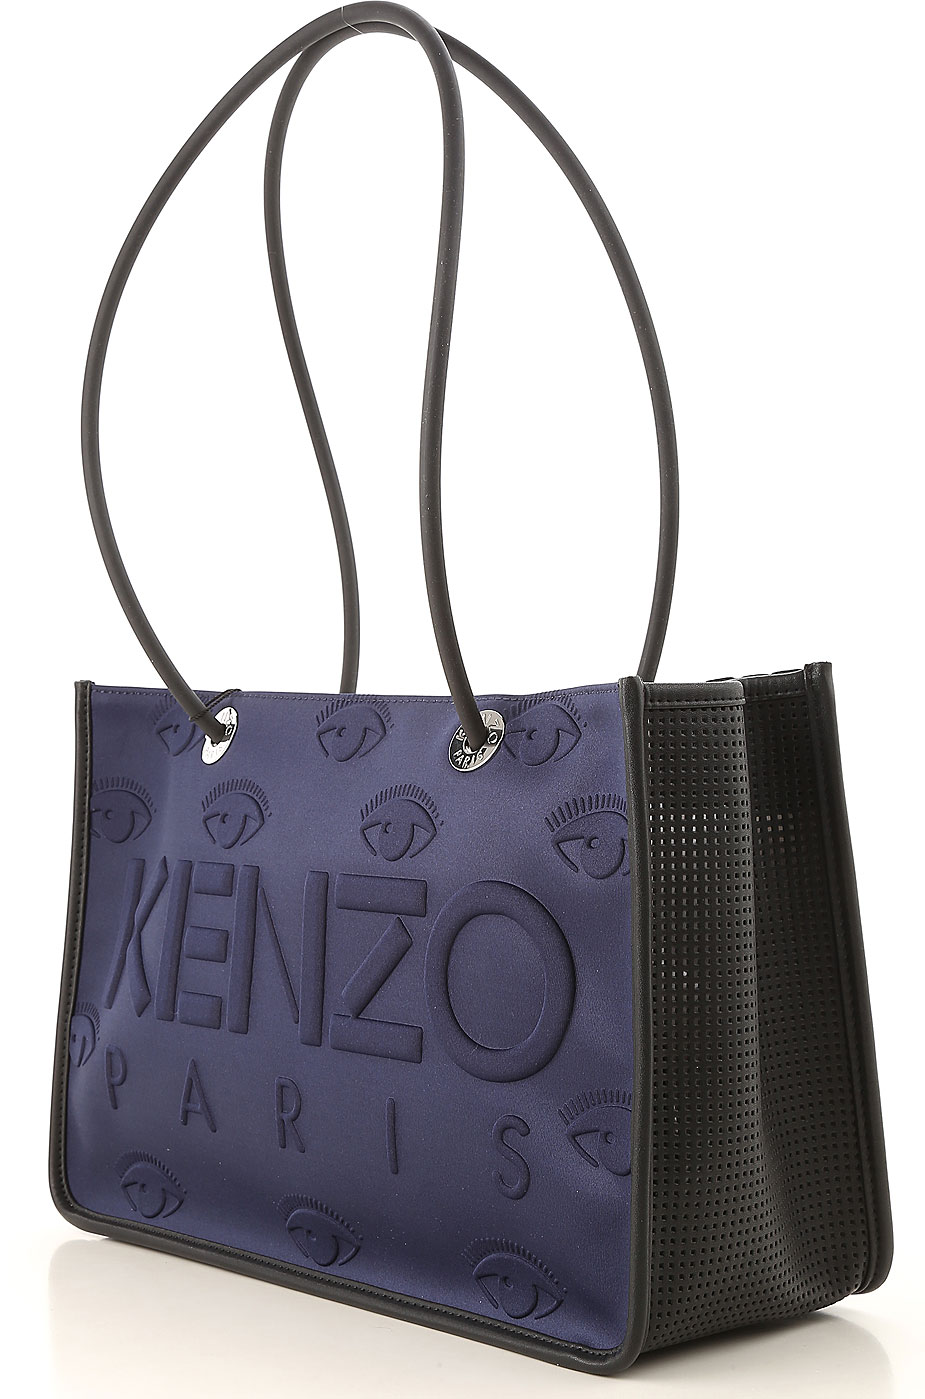 Kenzo Handbag Styles | semashow.com